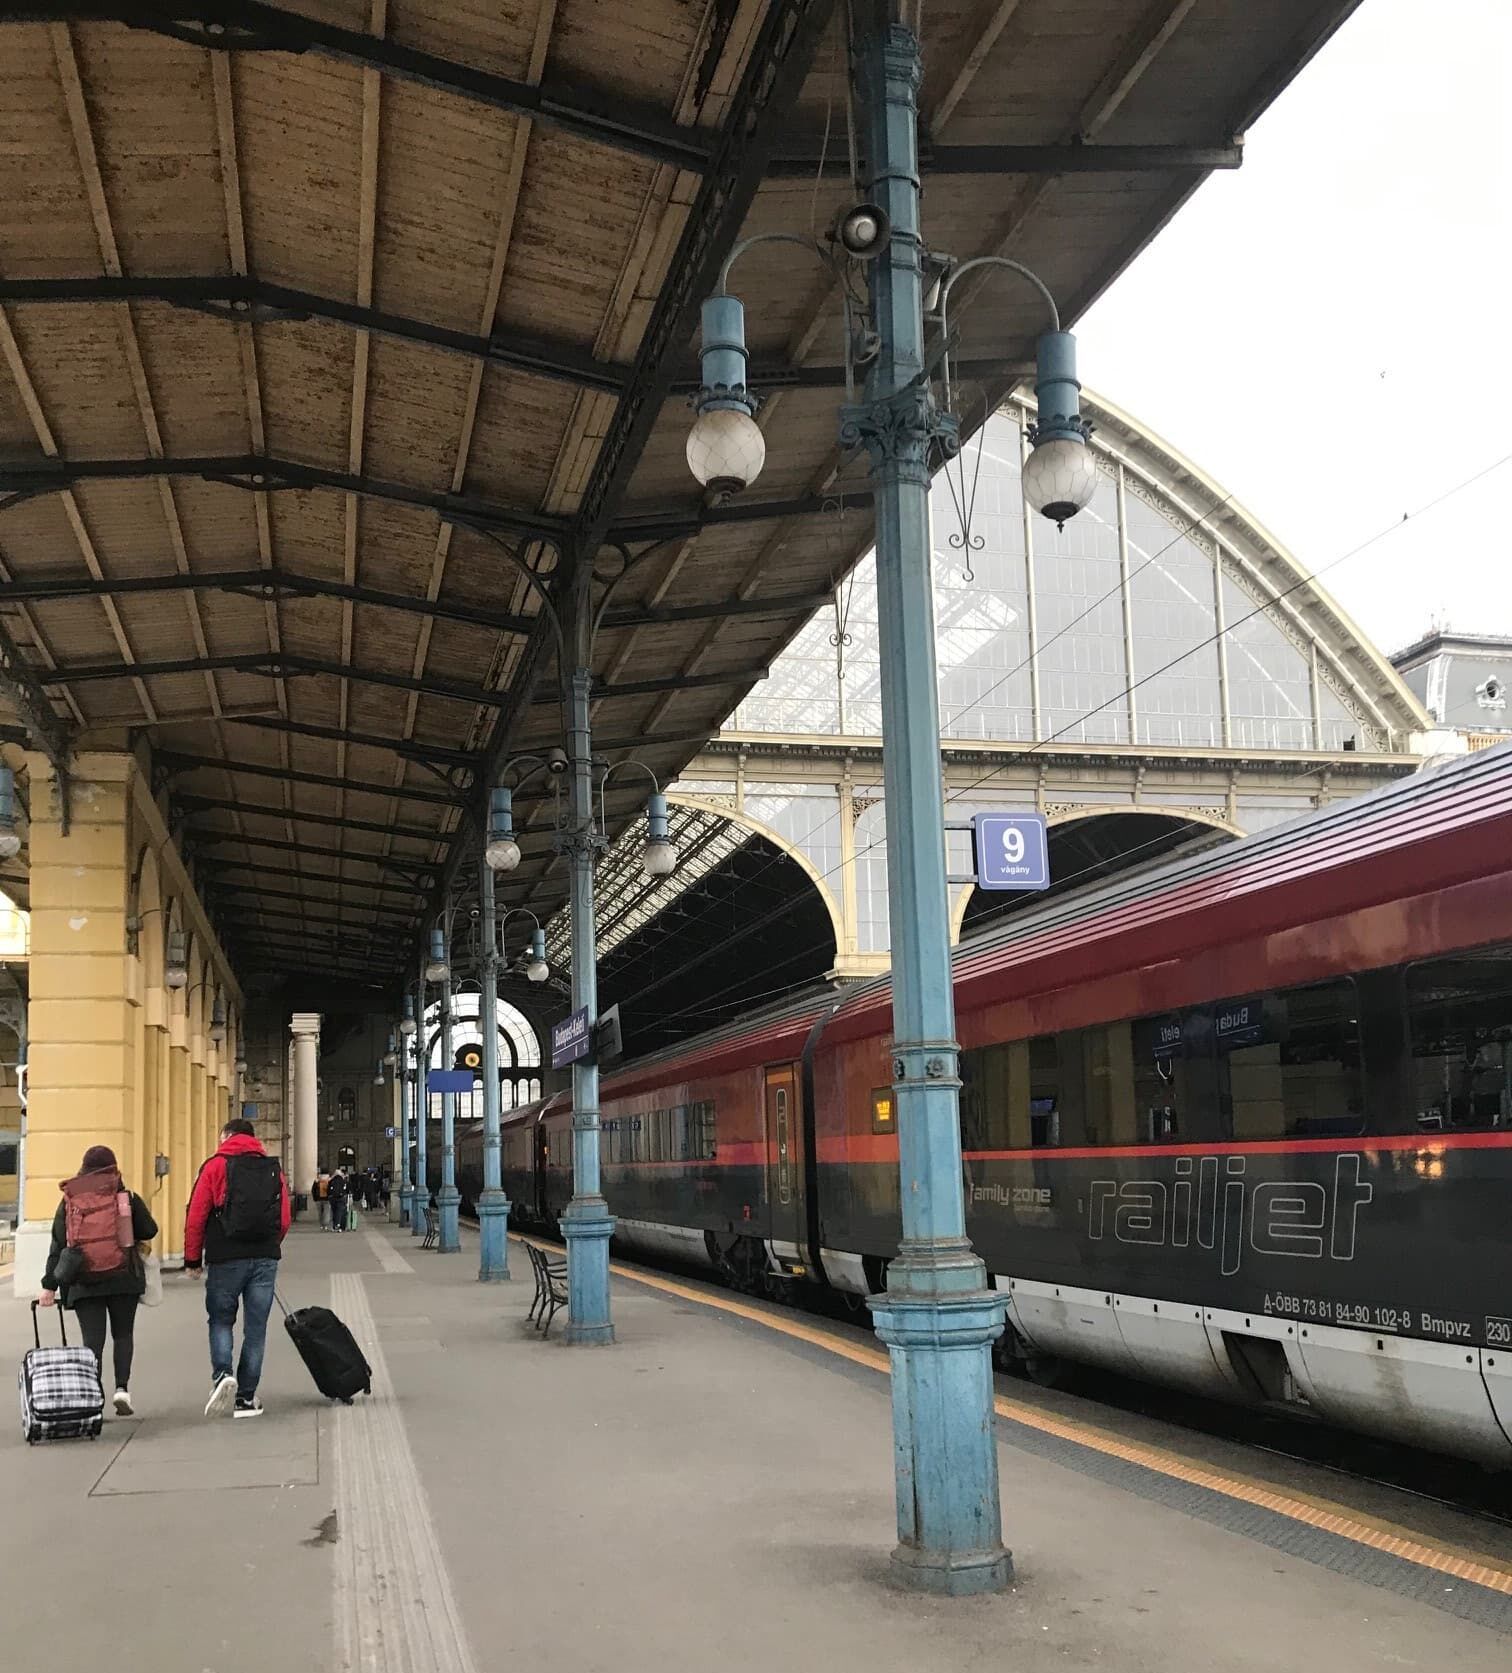 Ankunft am Bahnhof in Ungarn.